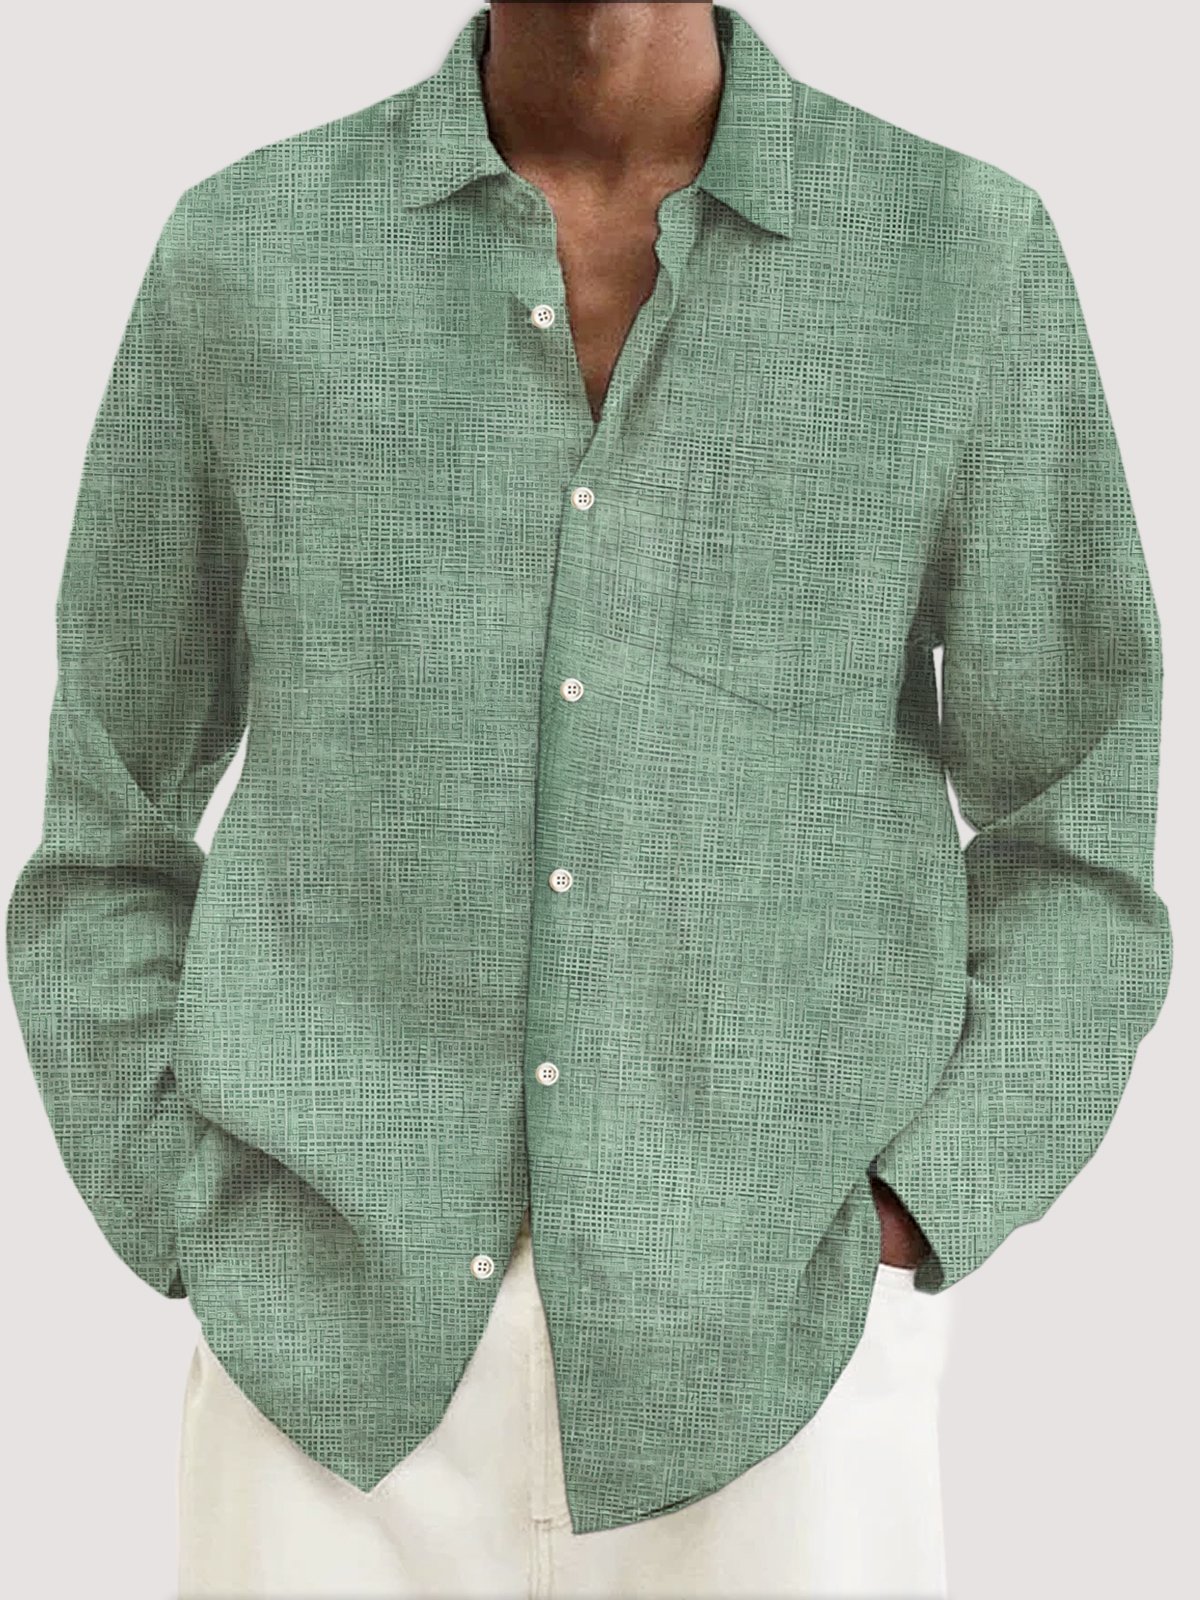 Royaura® Basics Textured Hemp Printed Men's Button Pocket Long Sleeve Shirt